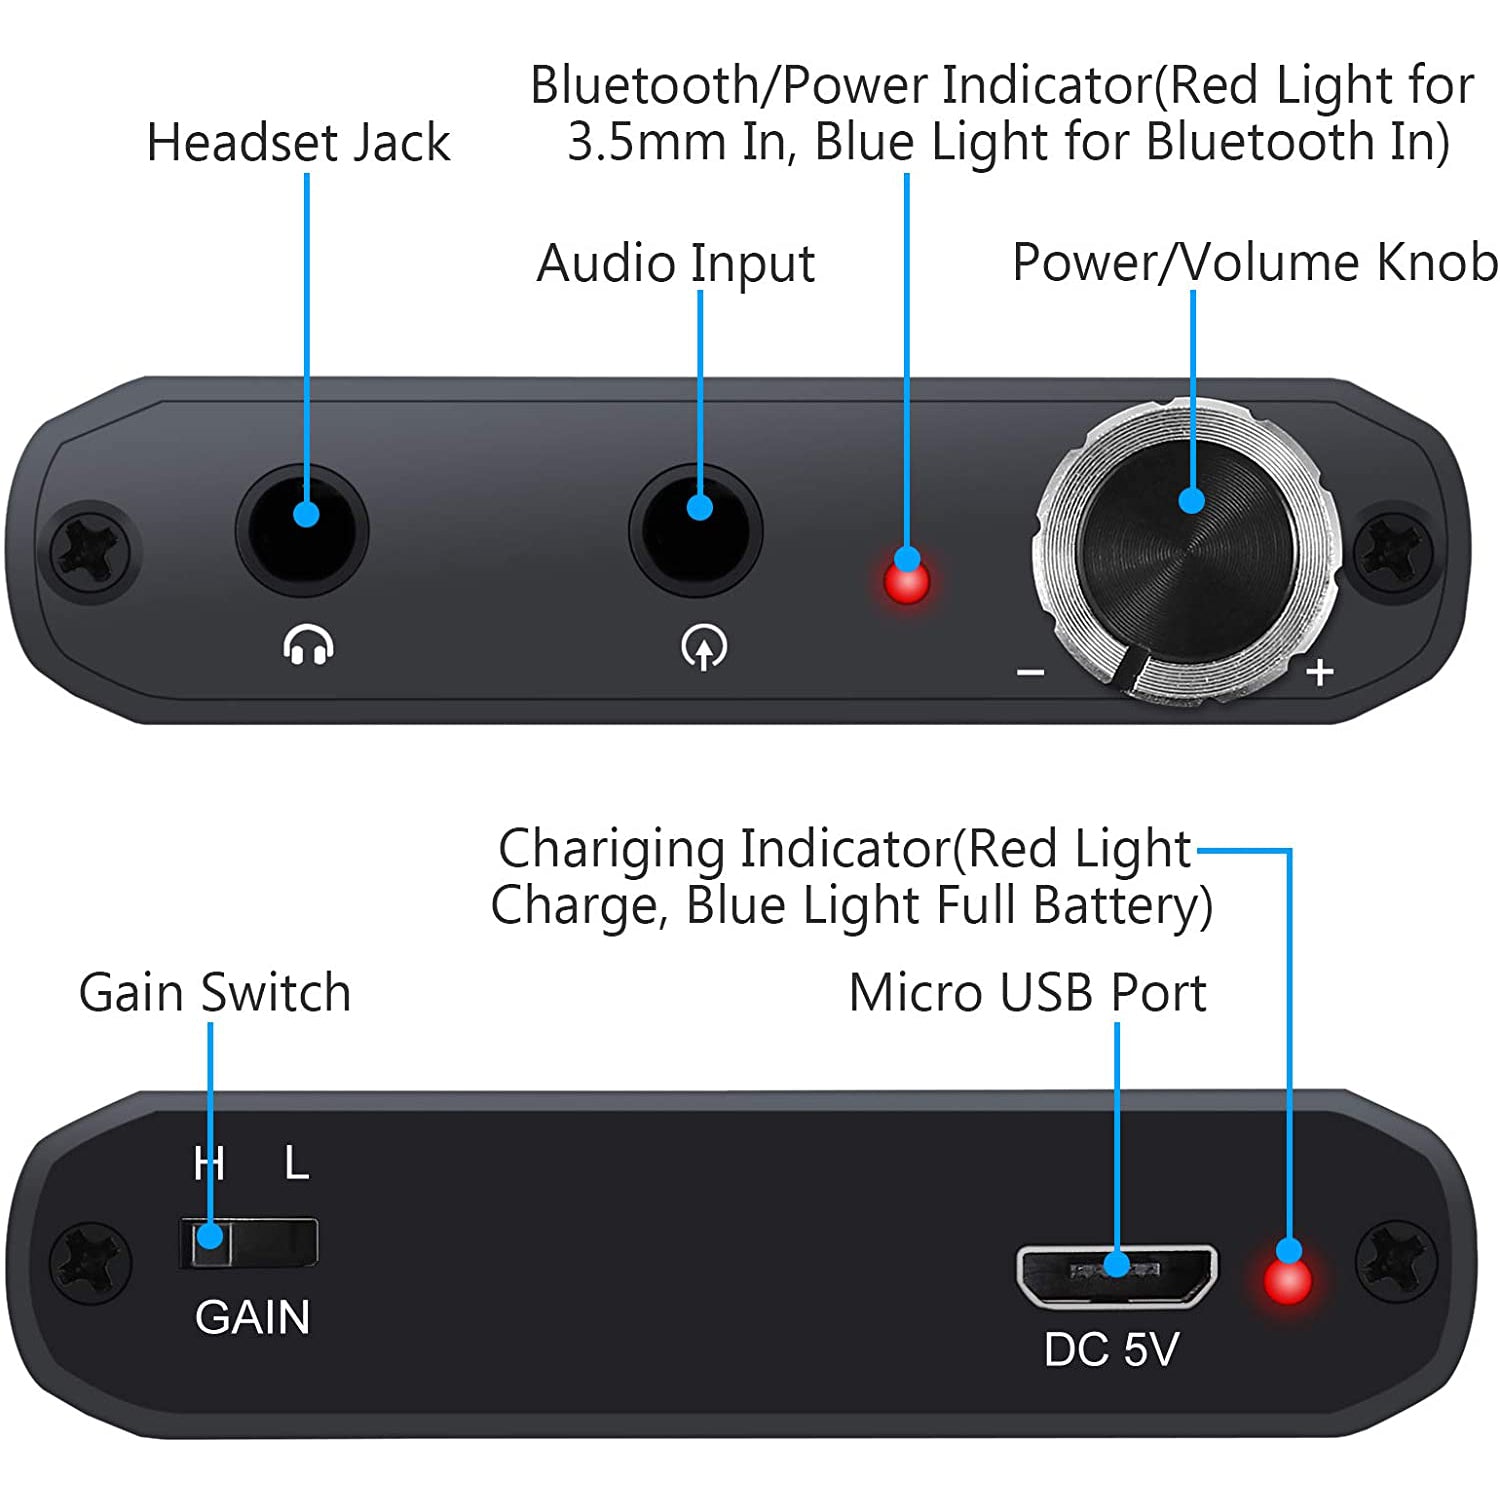 eSynic HiFi Headphone Amplifier Portable Bluetooth 5.0 Receiver 16-300Ω